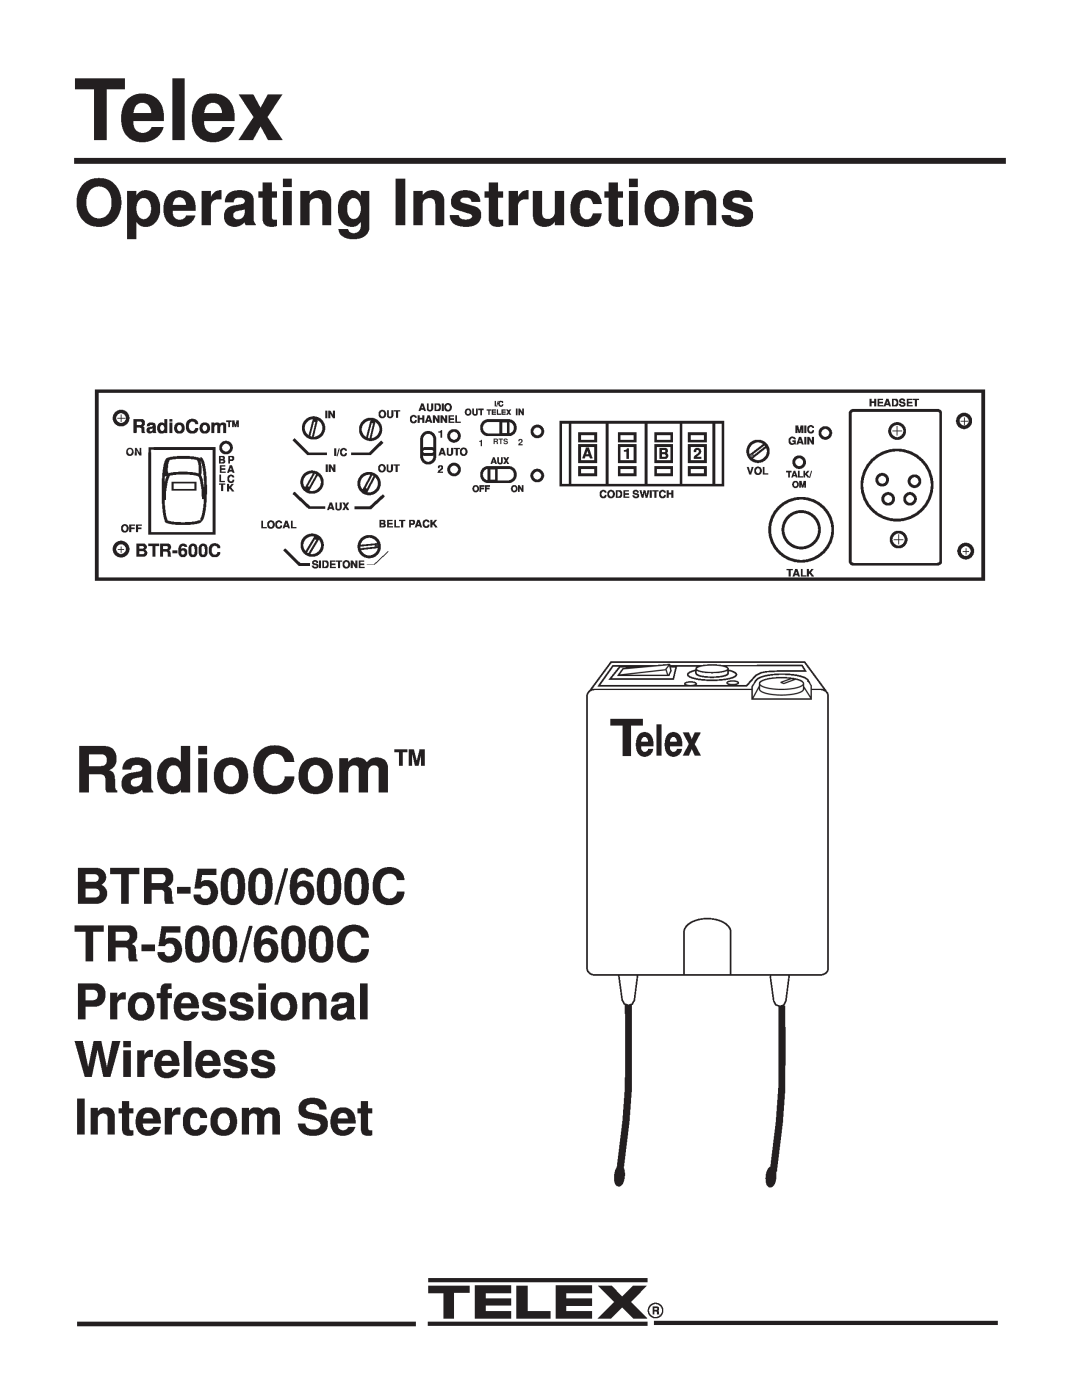 Telex BTR-500/600C operating instructions Telex, Operating Instructions, RadioCom, Intercom Set 